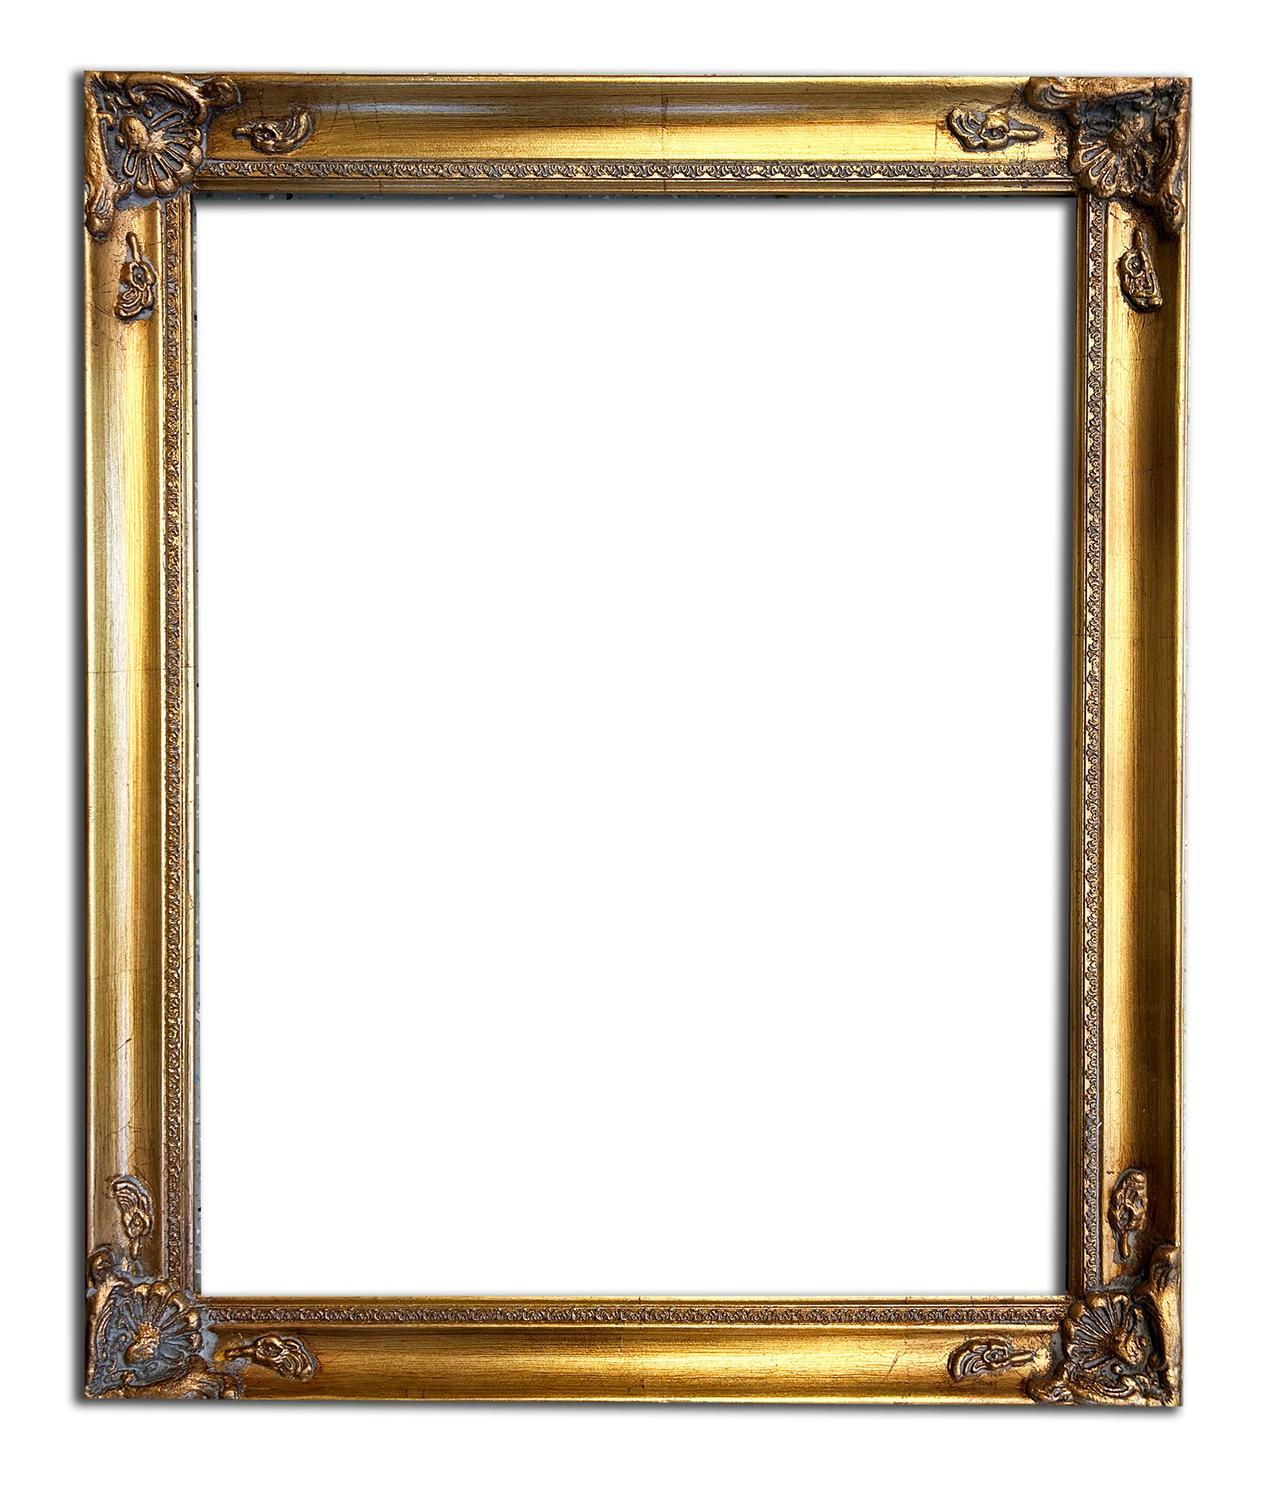 Wooden frame in golden color, 16x20 ins or 40x50 cm